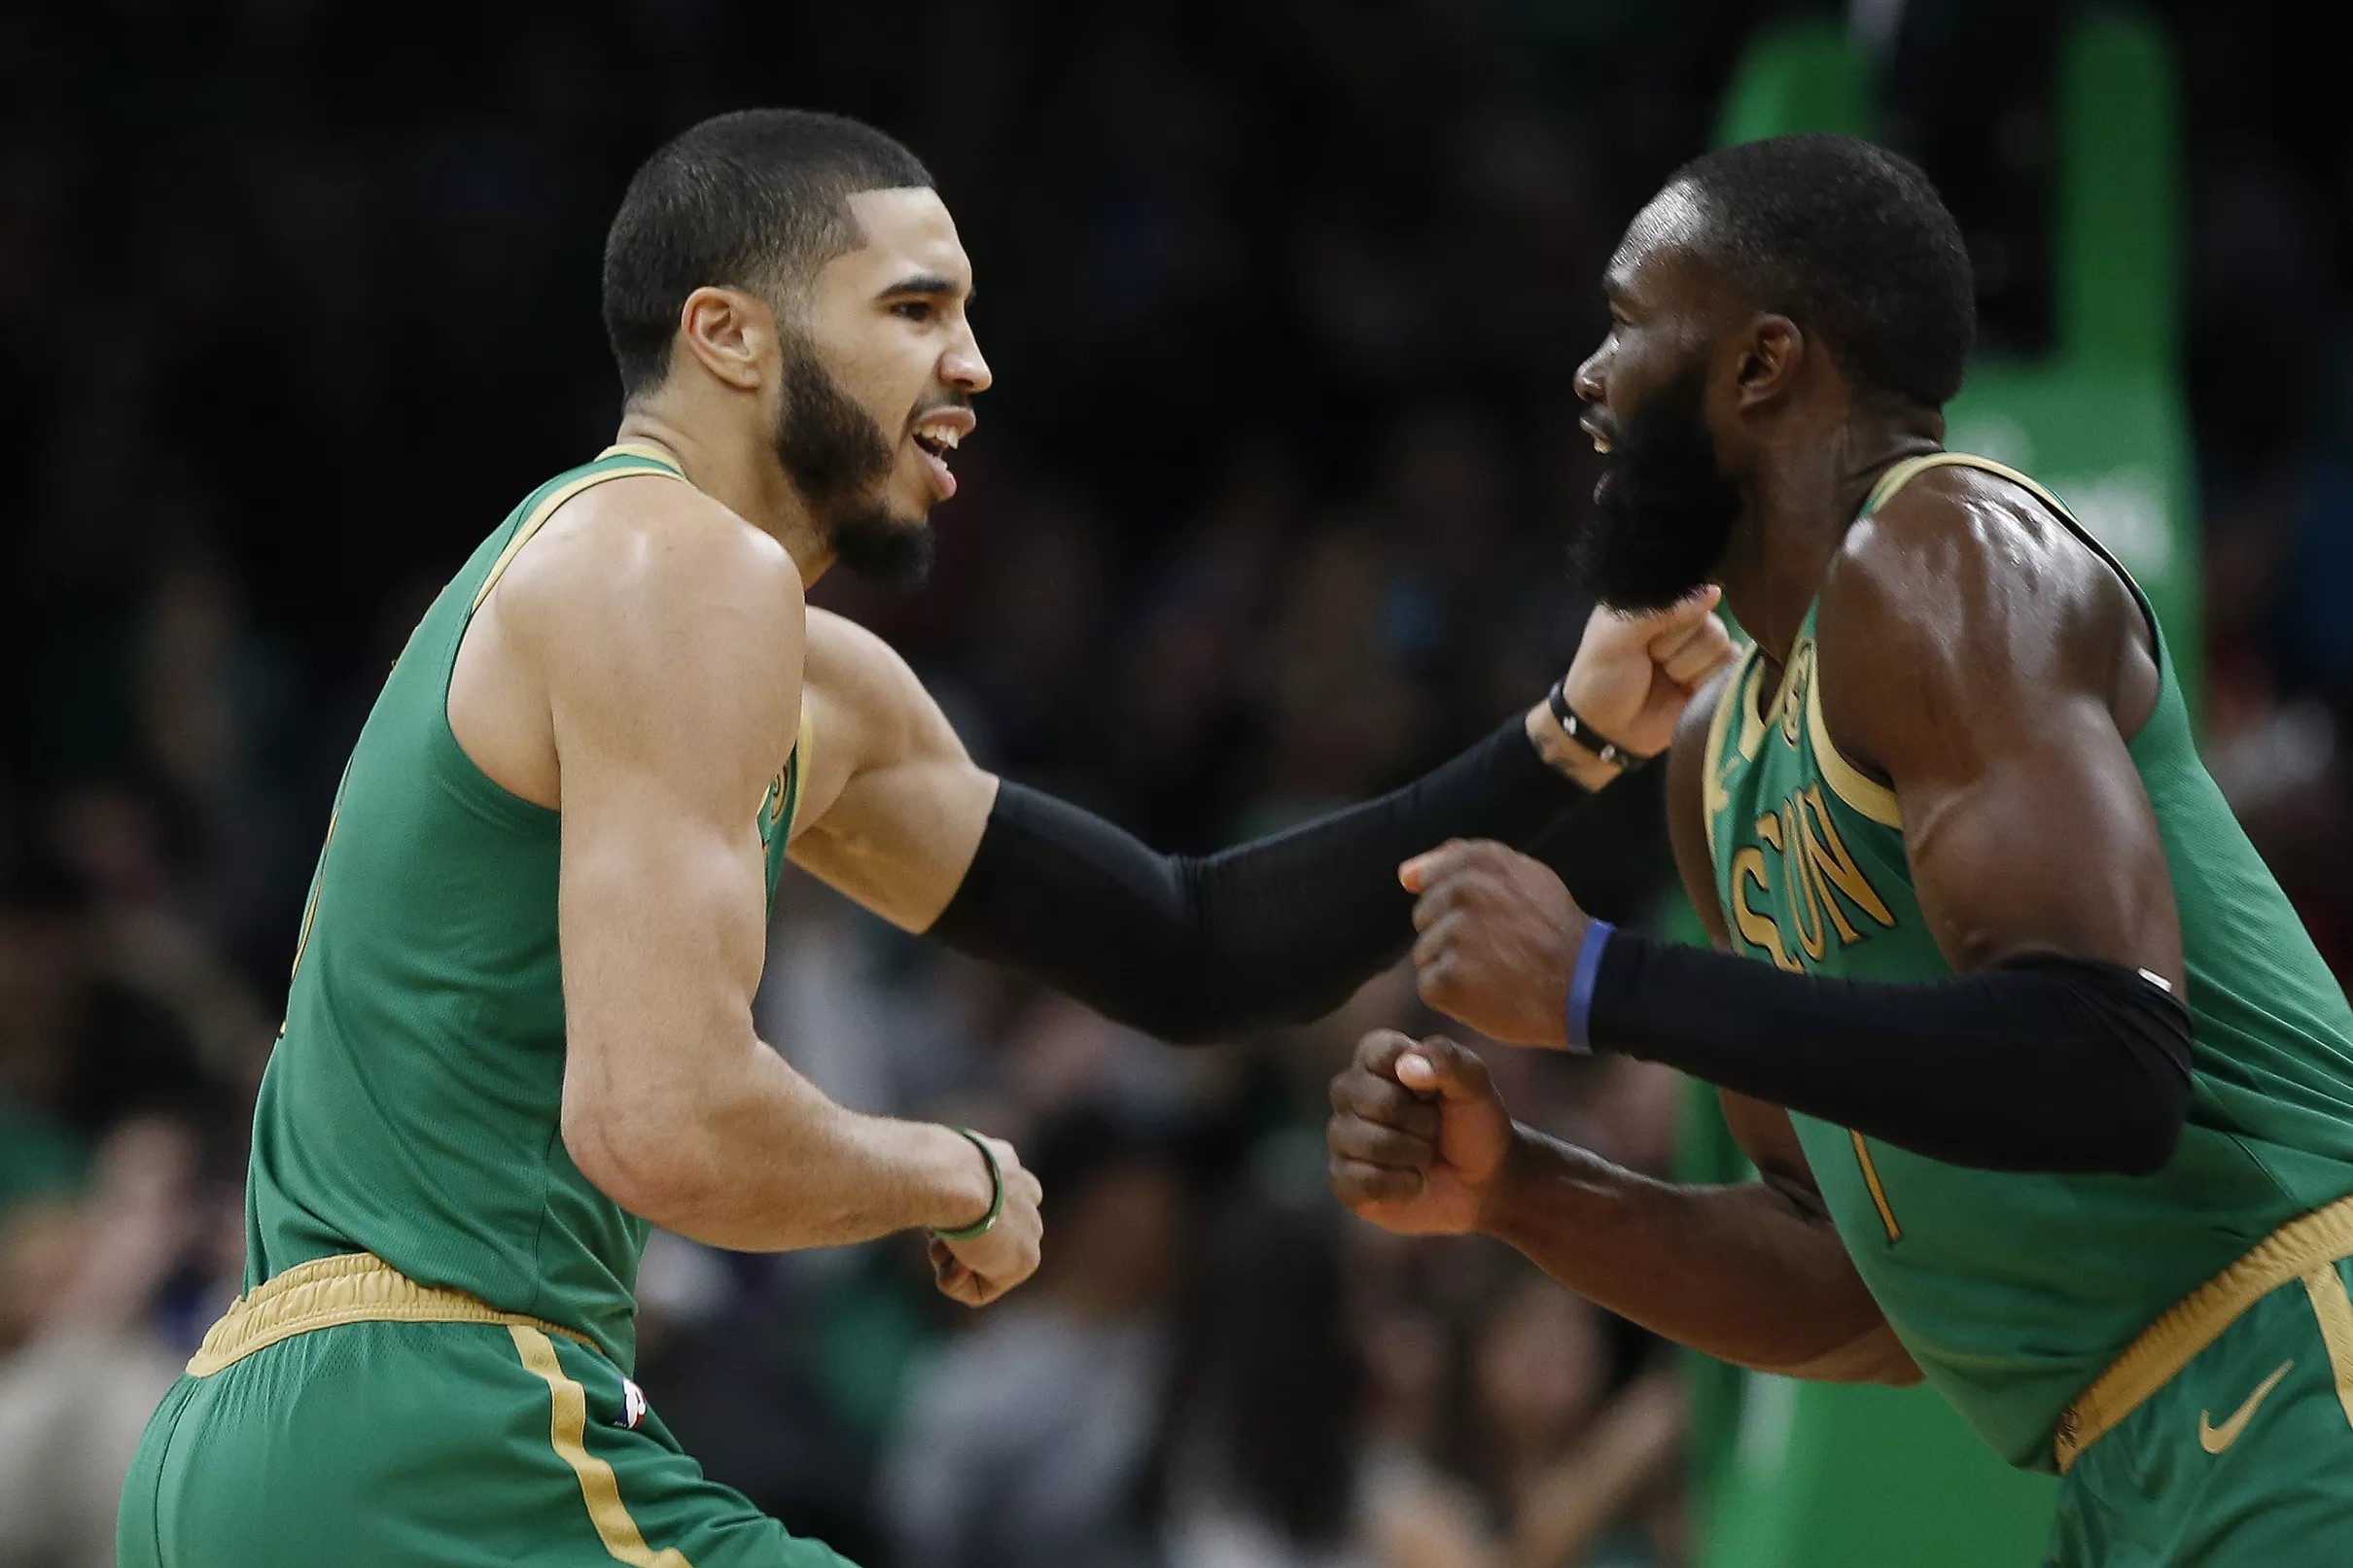 Are the Celtics championship contenders?